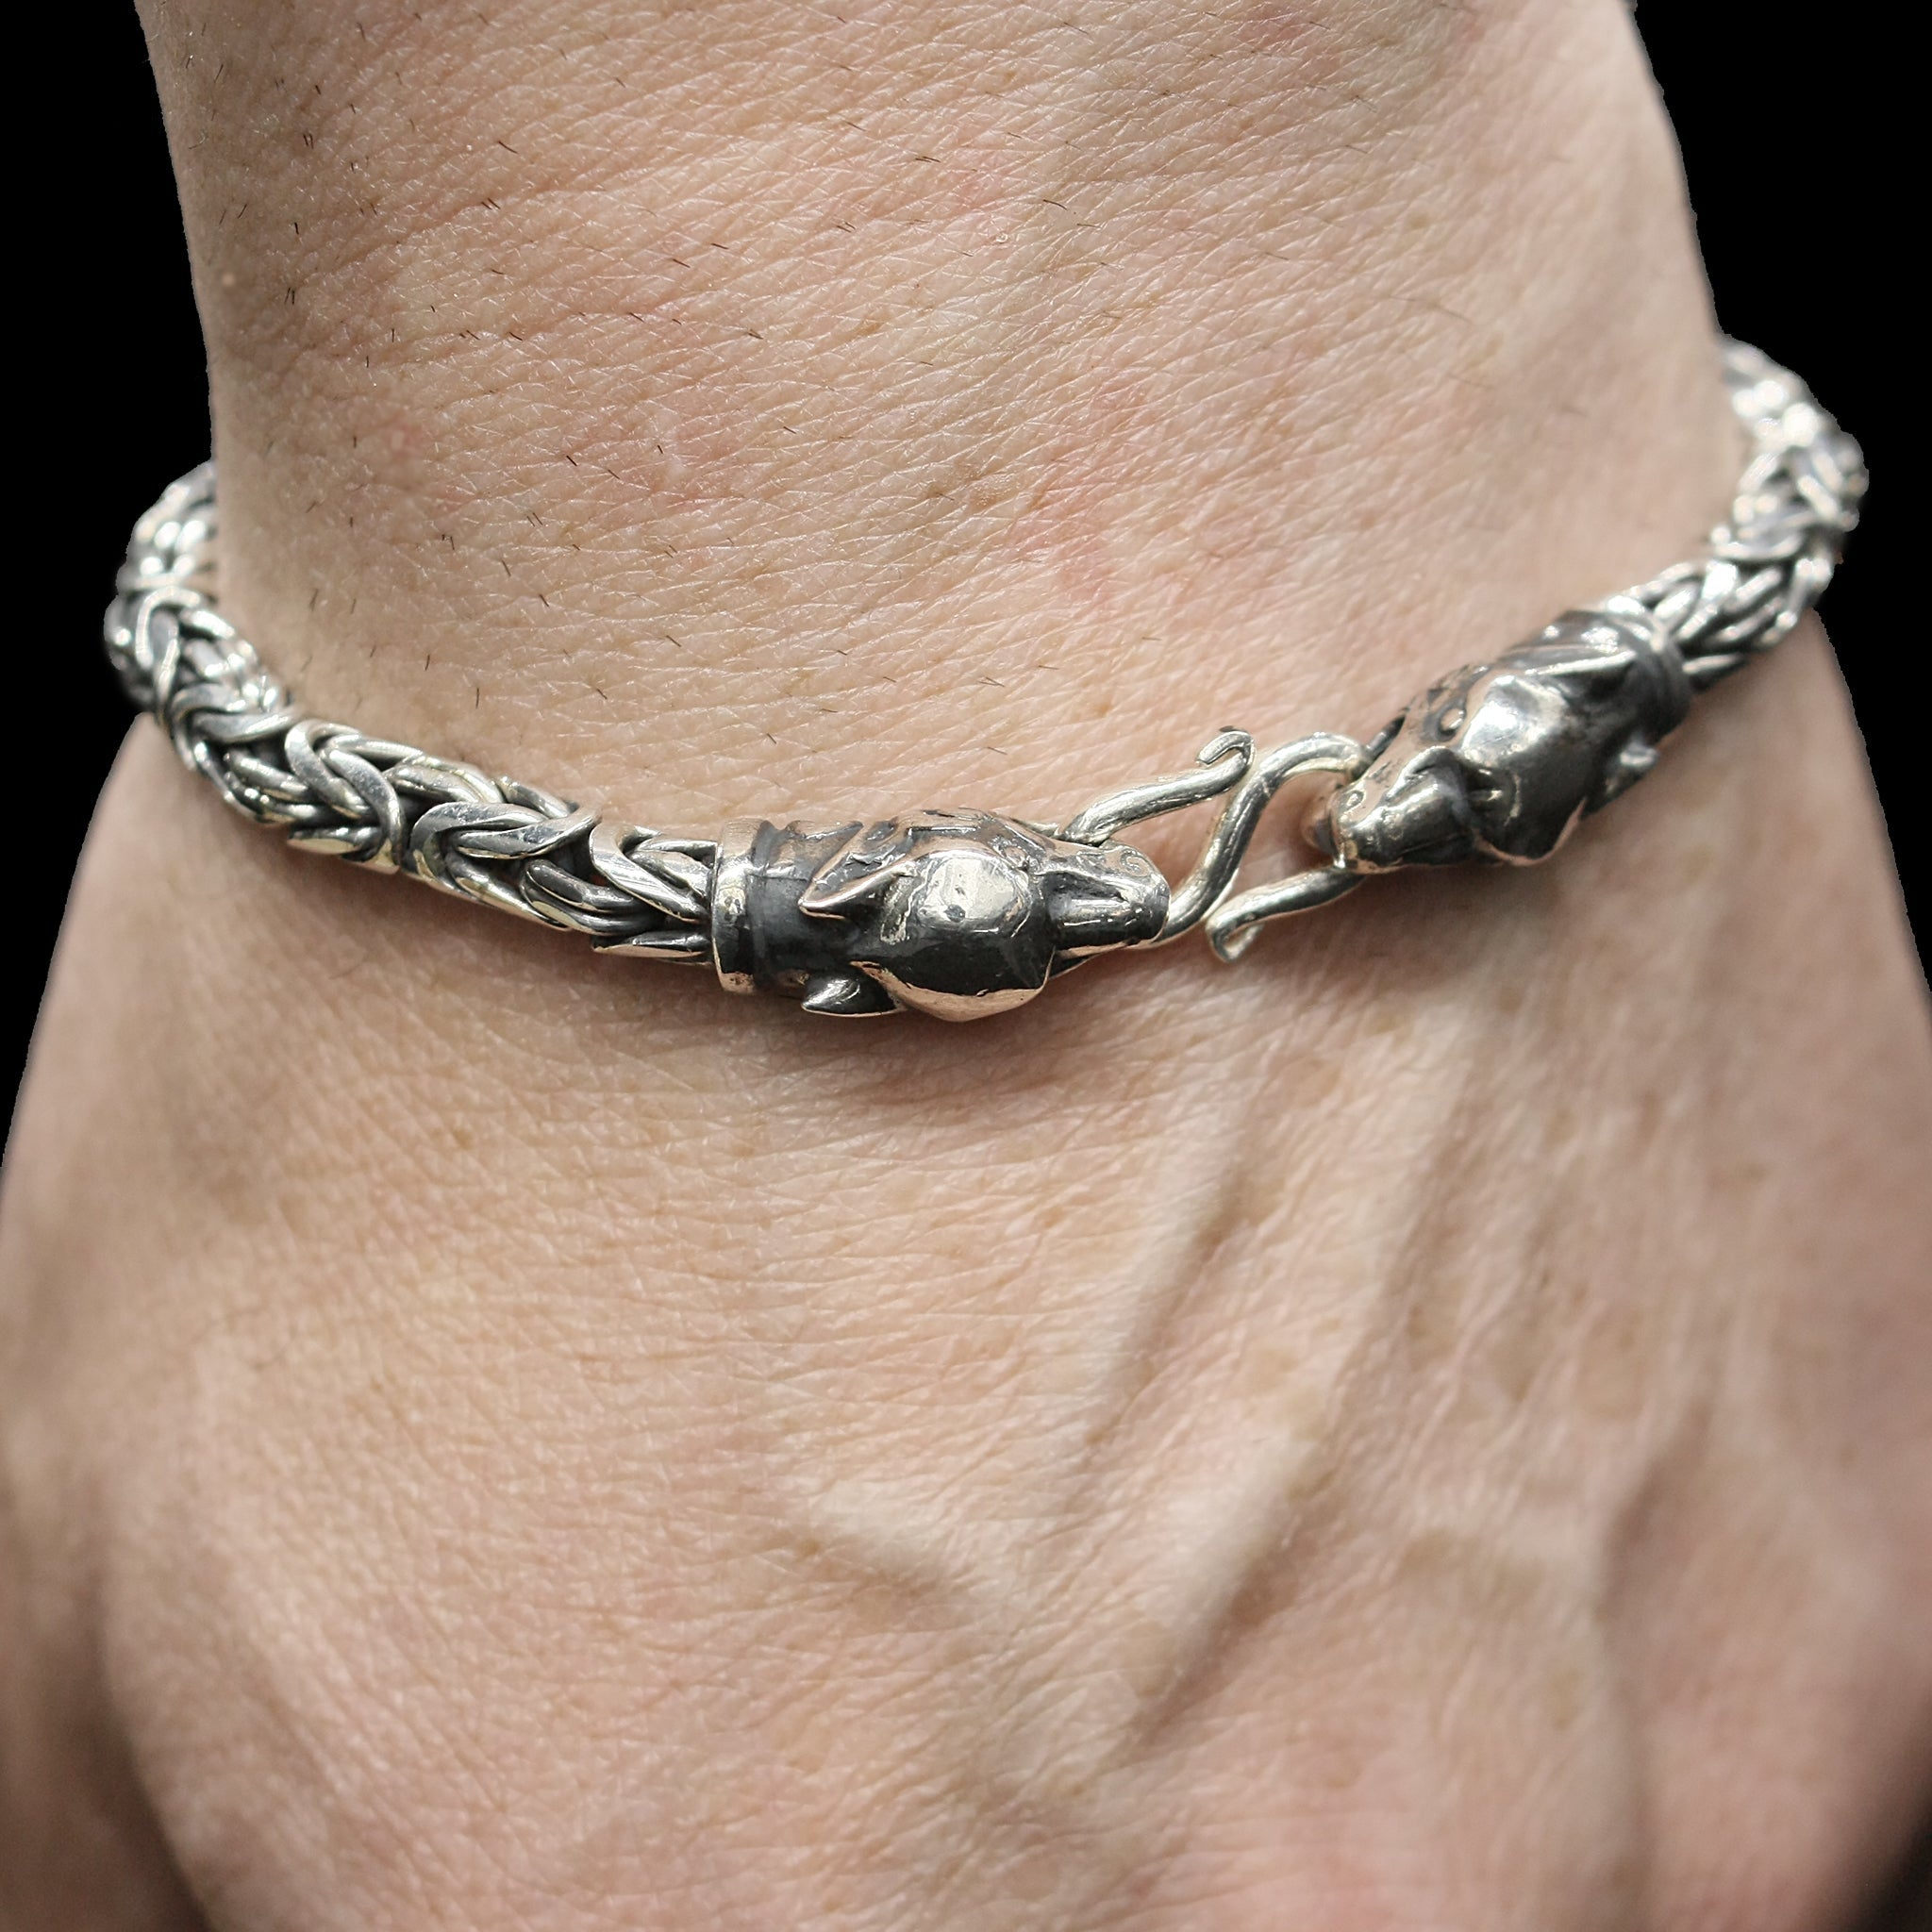 5mm Silver King Bracelet With Ferocious Wolf Heads On Wrist